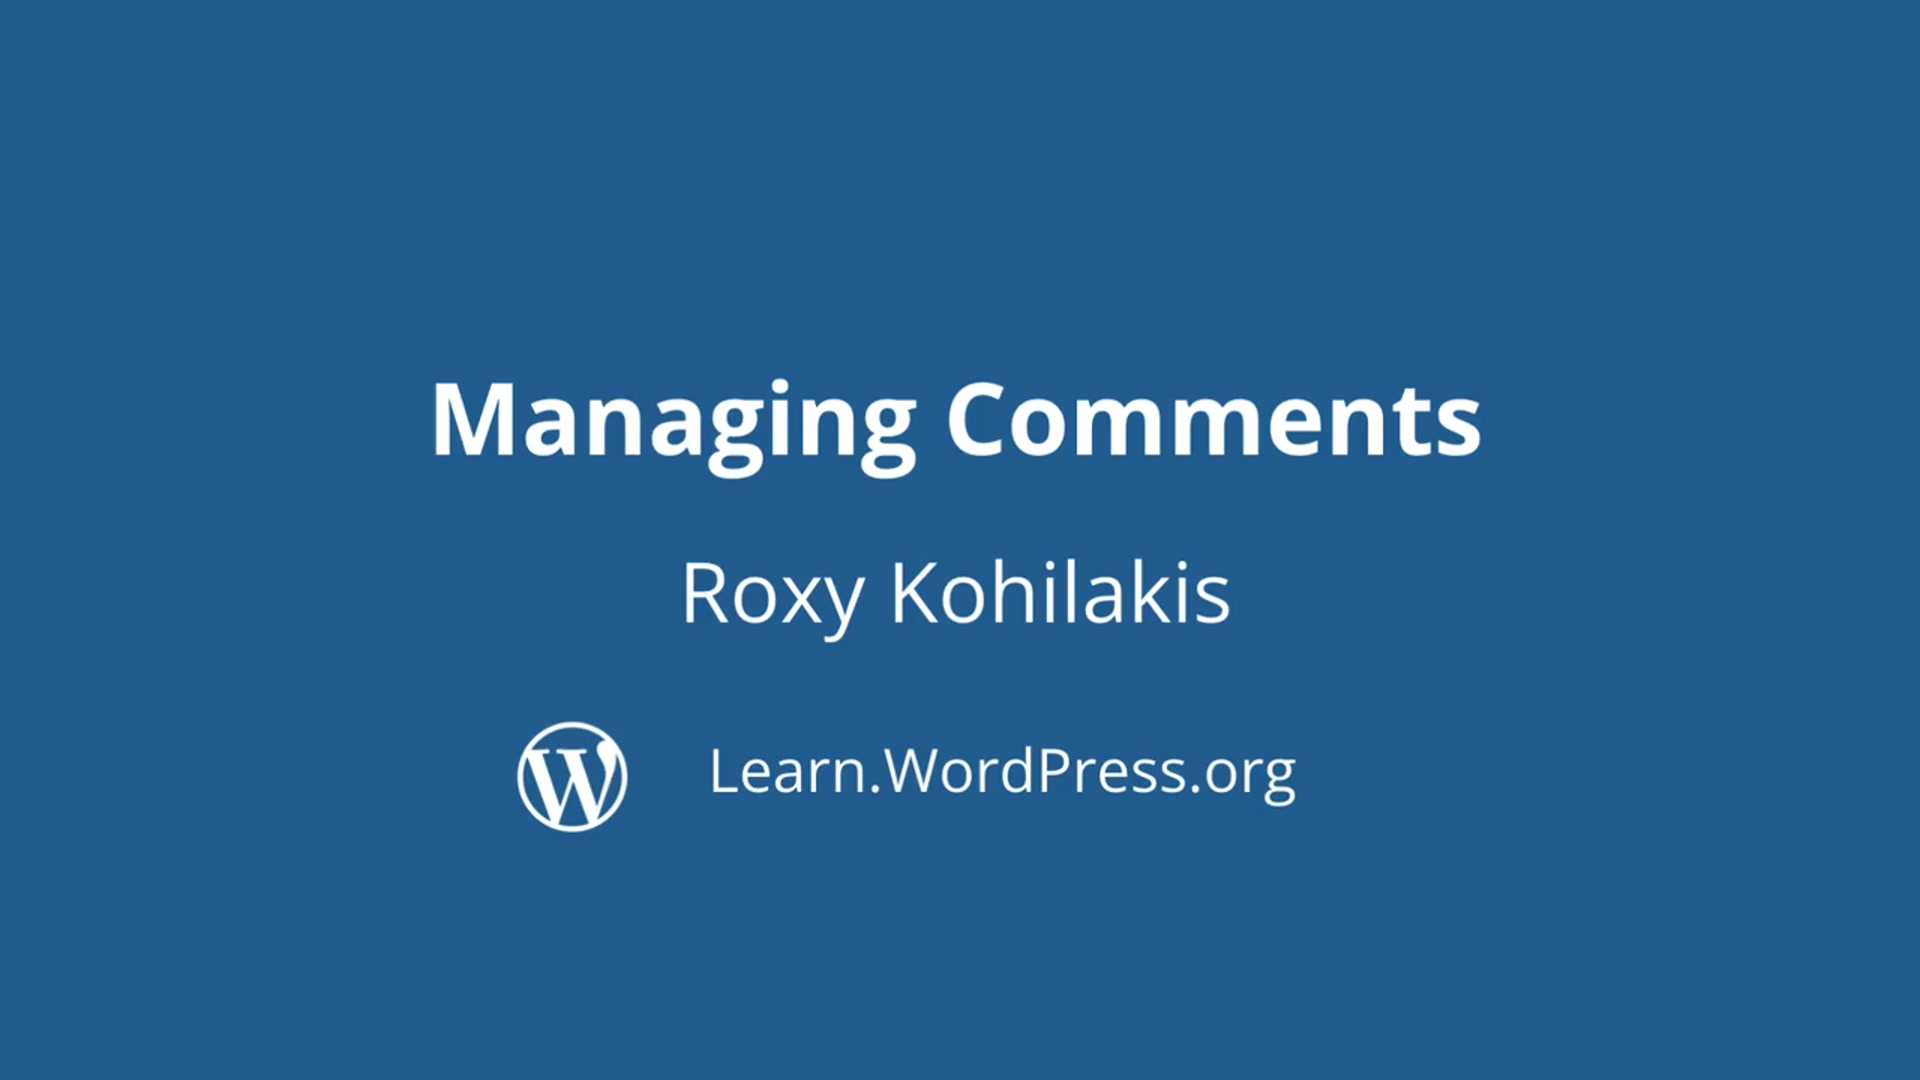 Roxy Kohilakis: Managing Comments